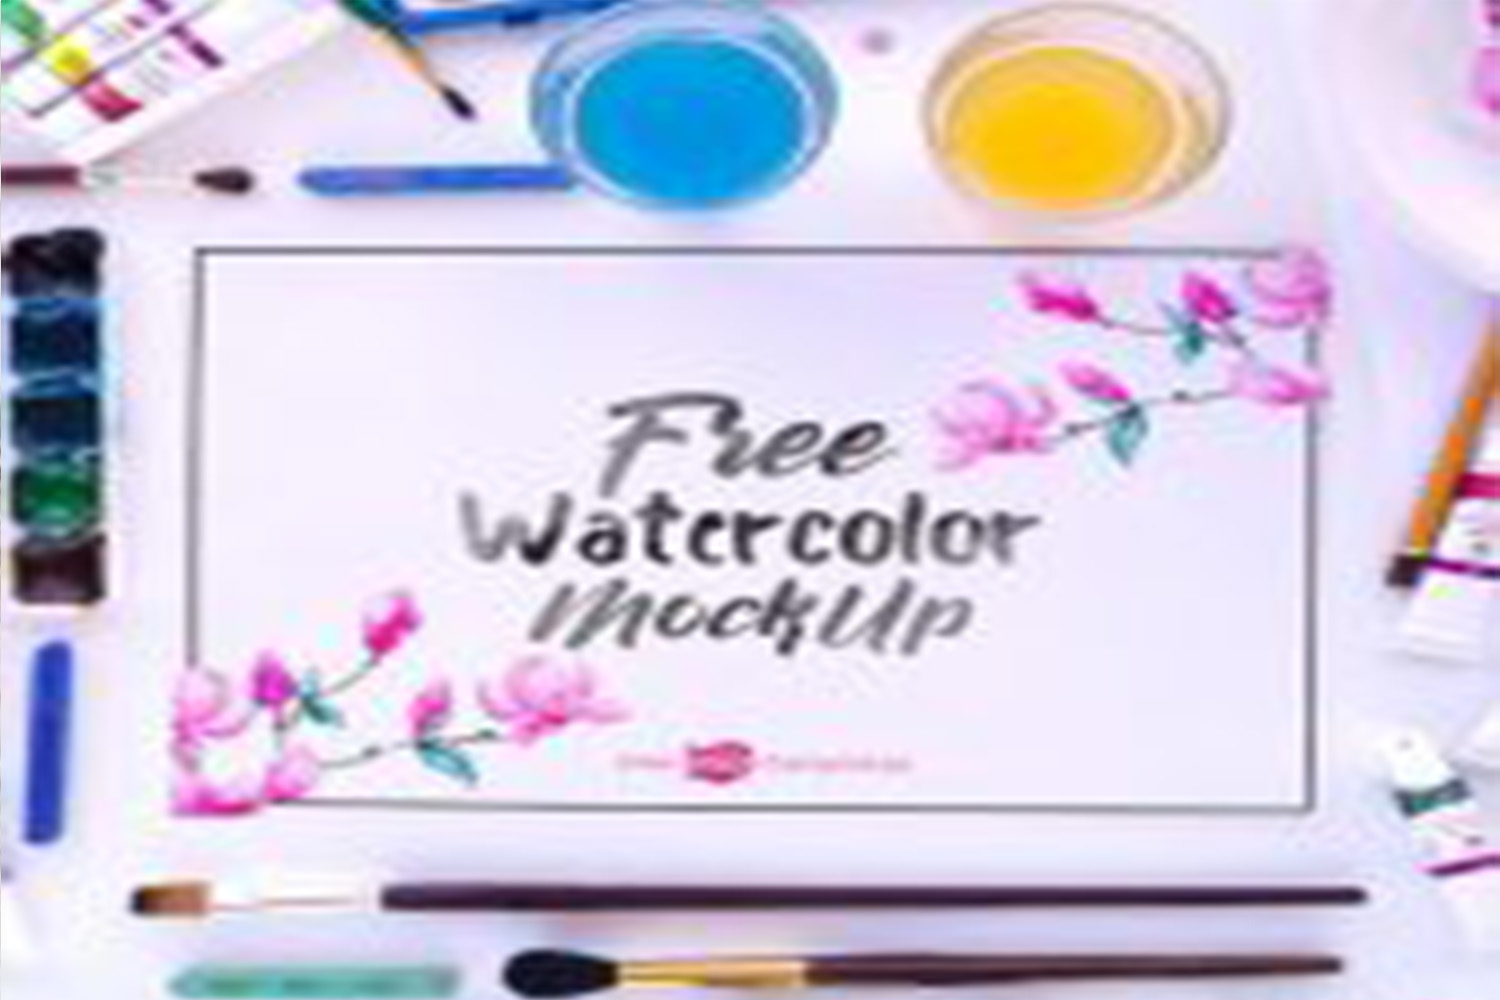 Watercolor Mockup free download